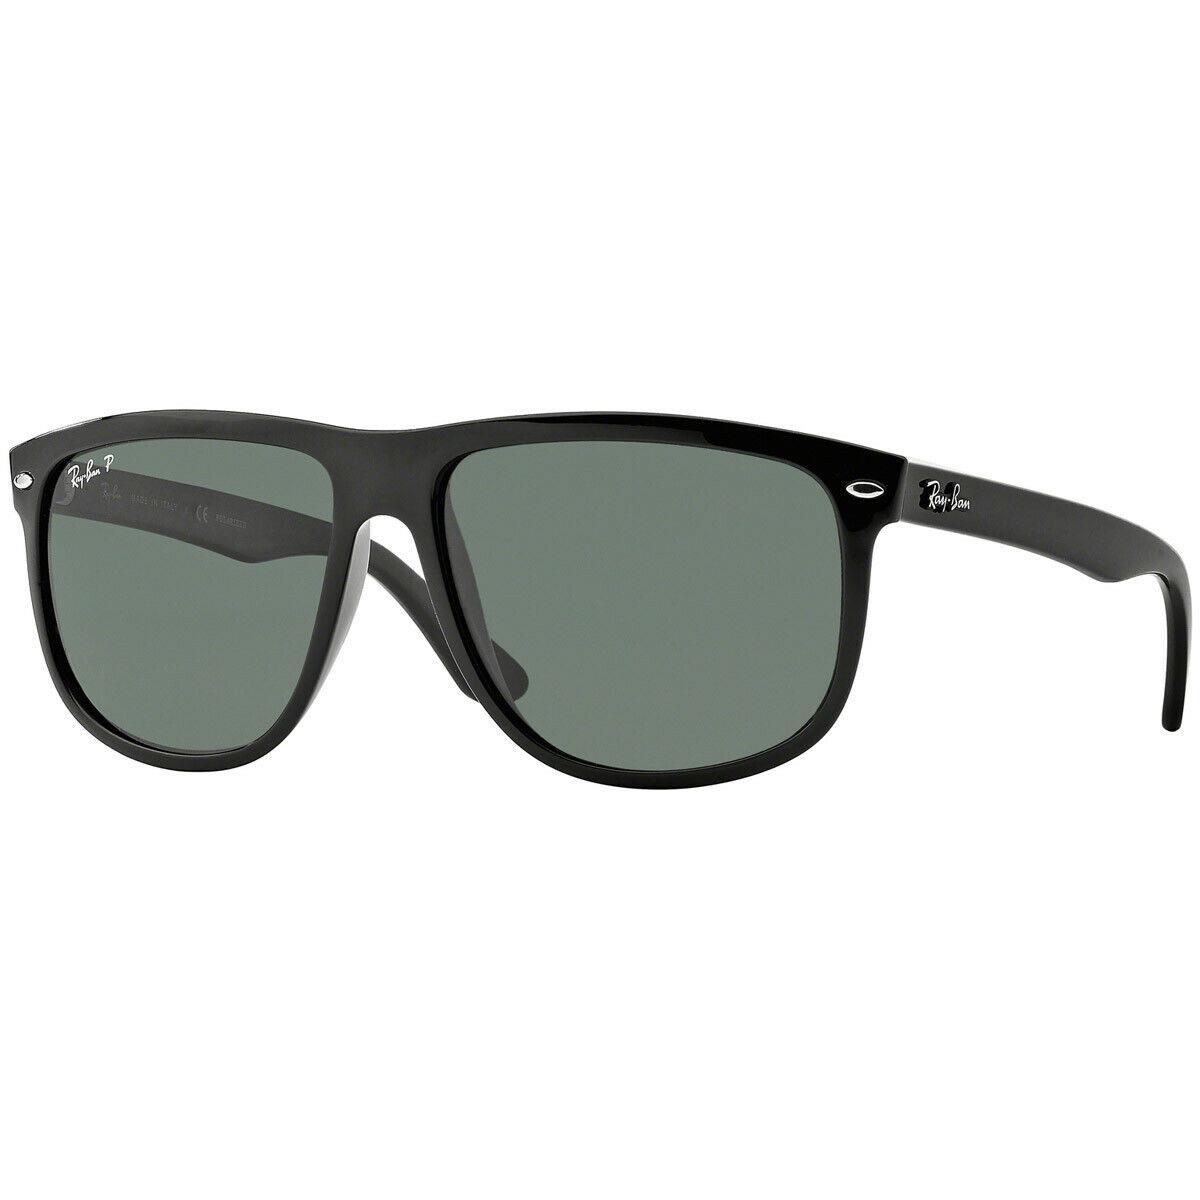 Ray-ban Highstreet Black Frame Polarized Green Lens Sunglasses RB4147 601/58 60